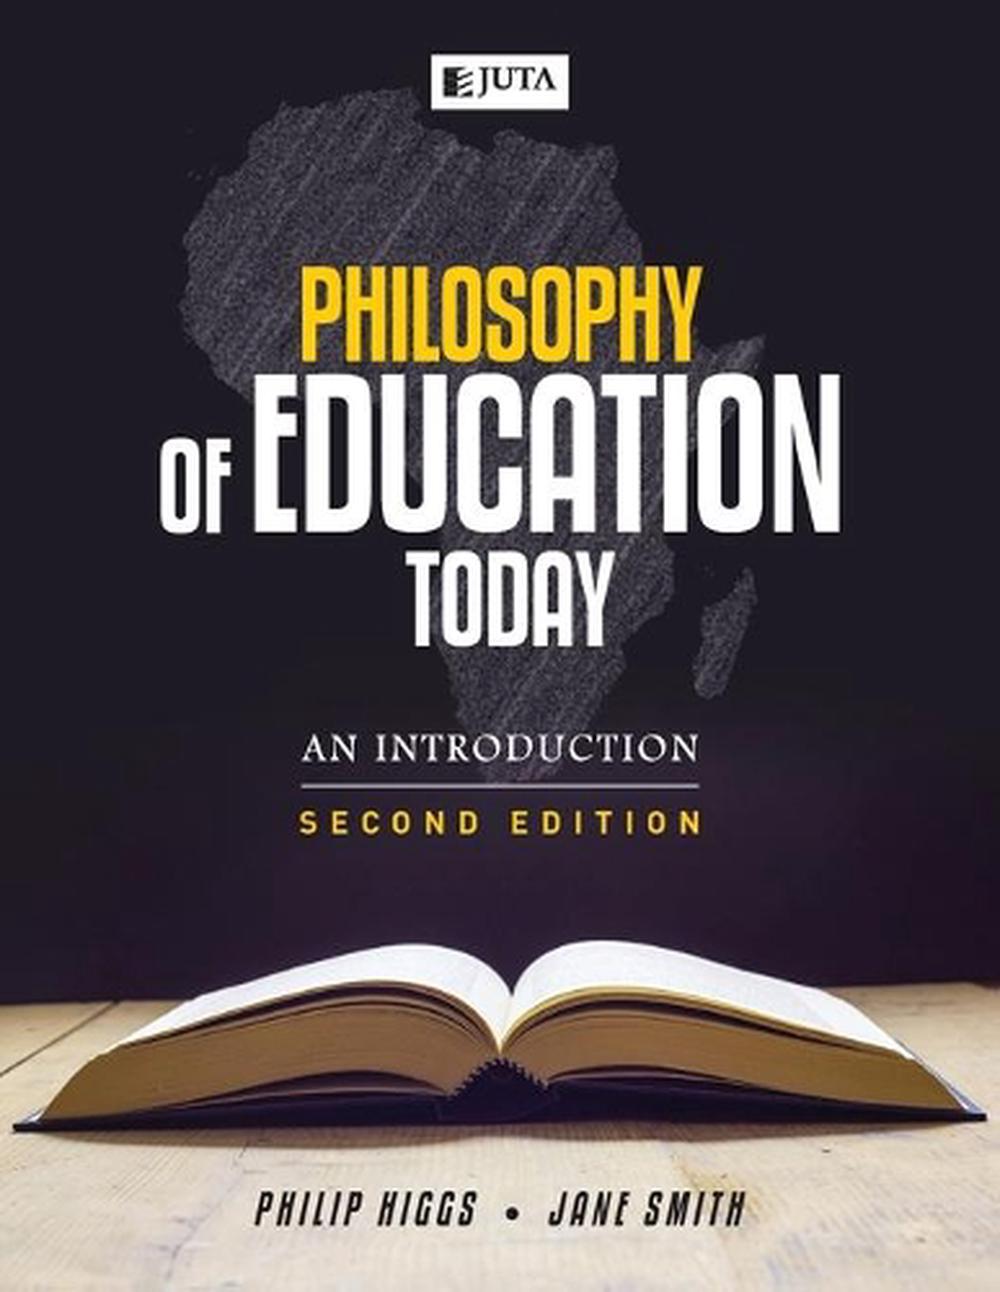 books about education pdf